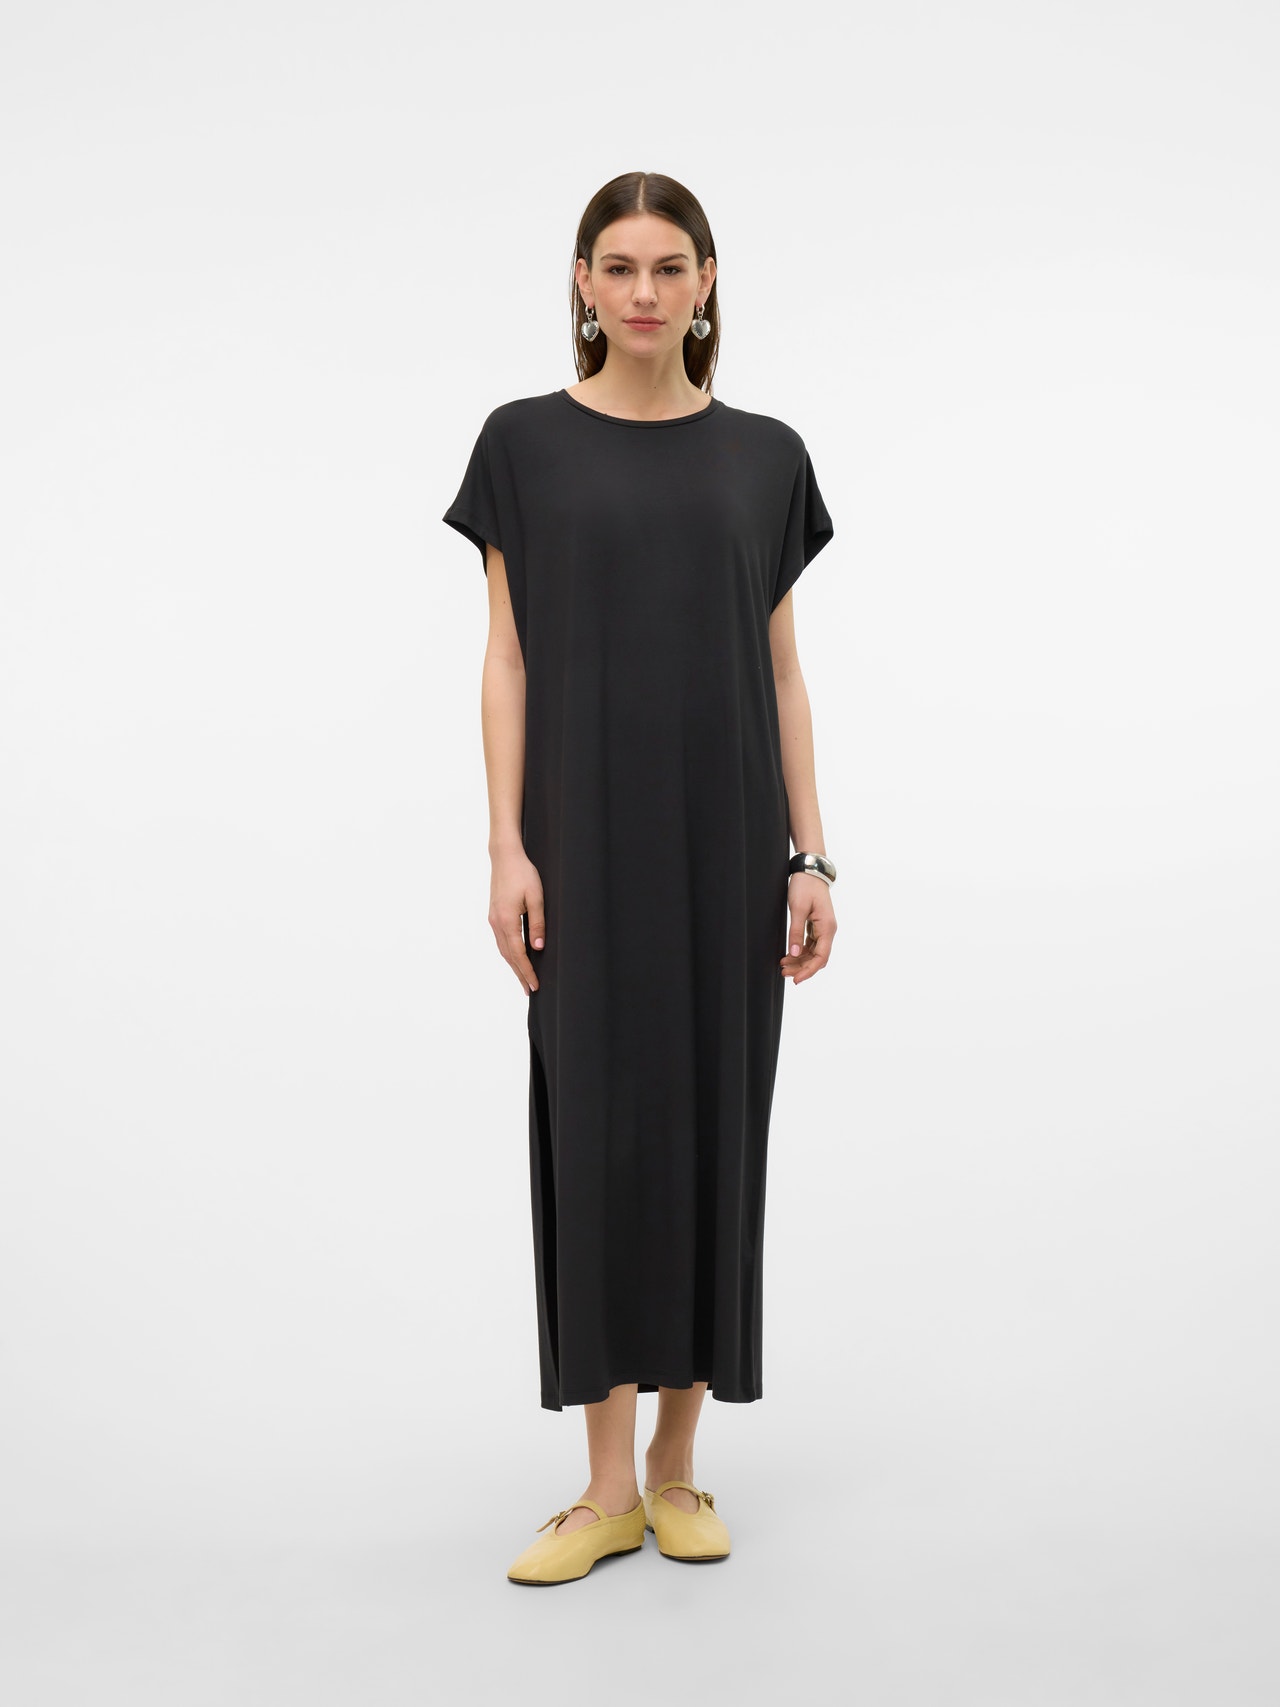 Vero Moda VMSINI Long dress -Black - 10307625